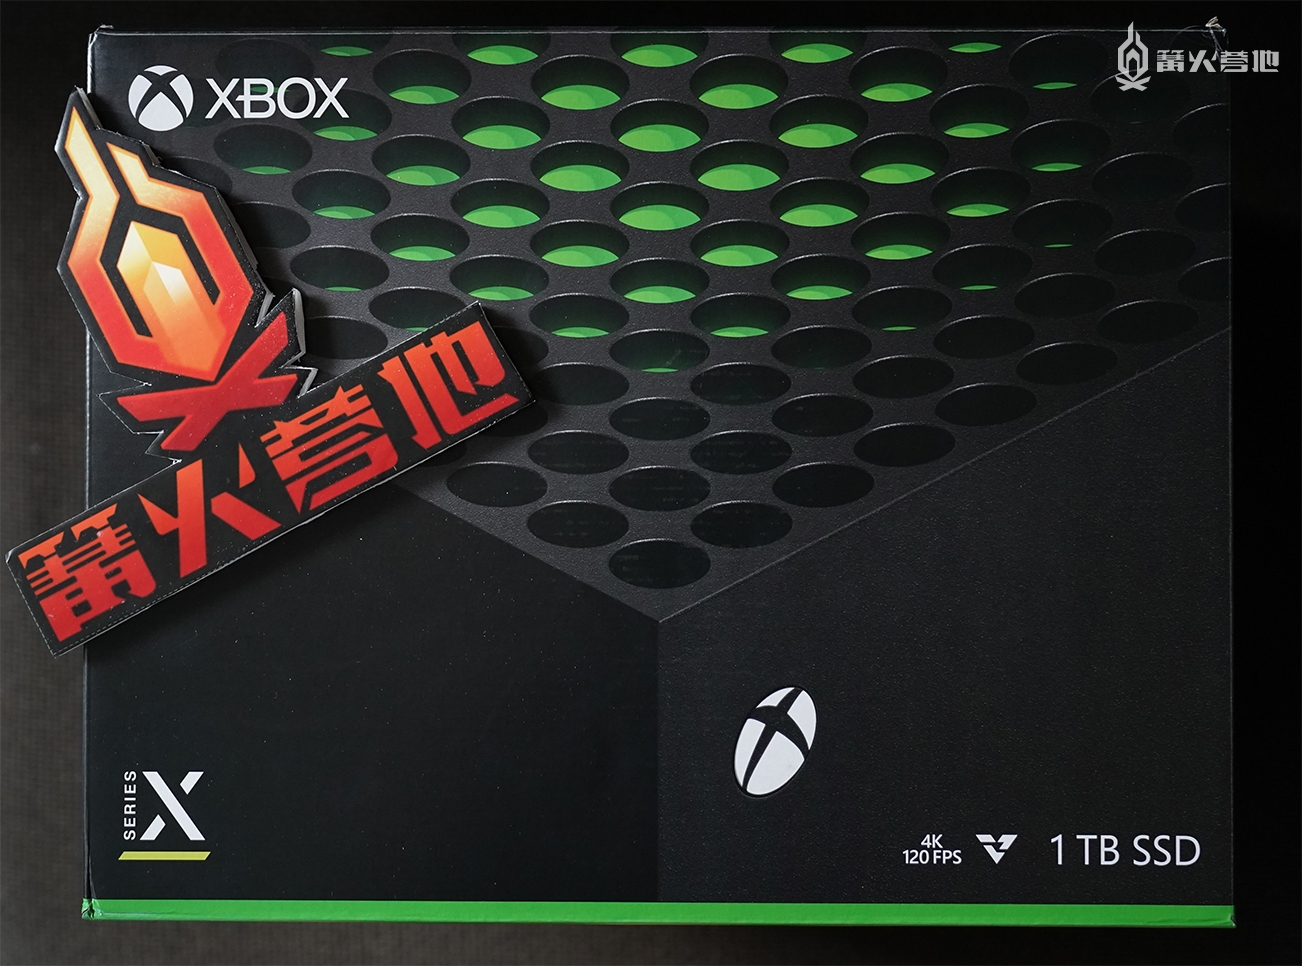 Xbox Series X 篝火开箱主机与配件细节一览-篝火资讯-篝火营地